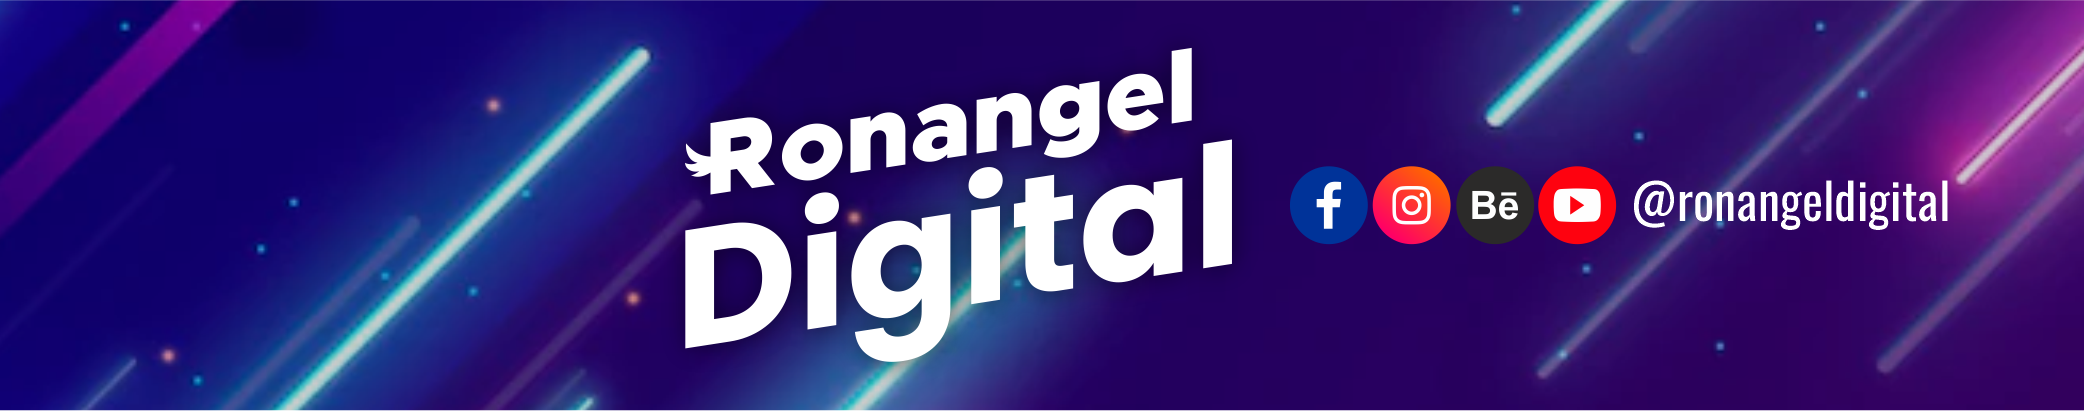 Ronangel Digital's profile banner